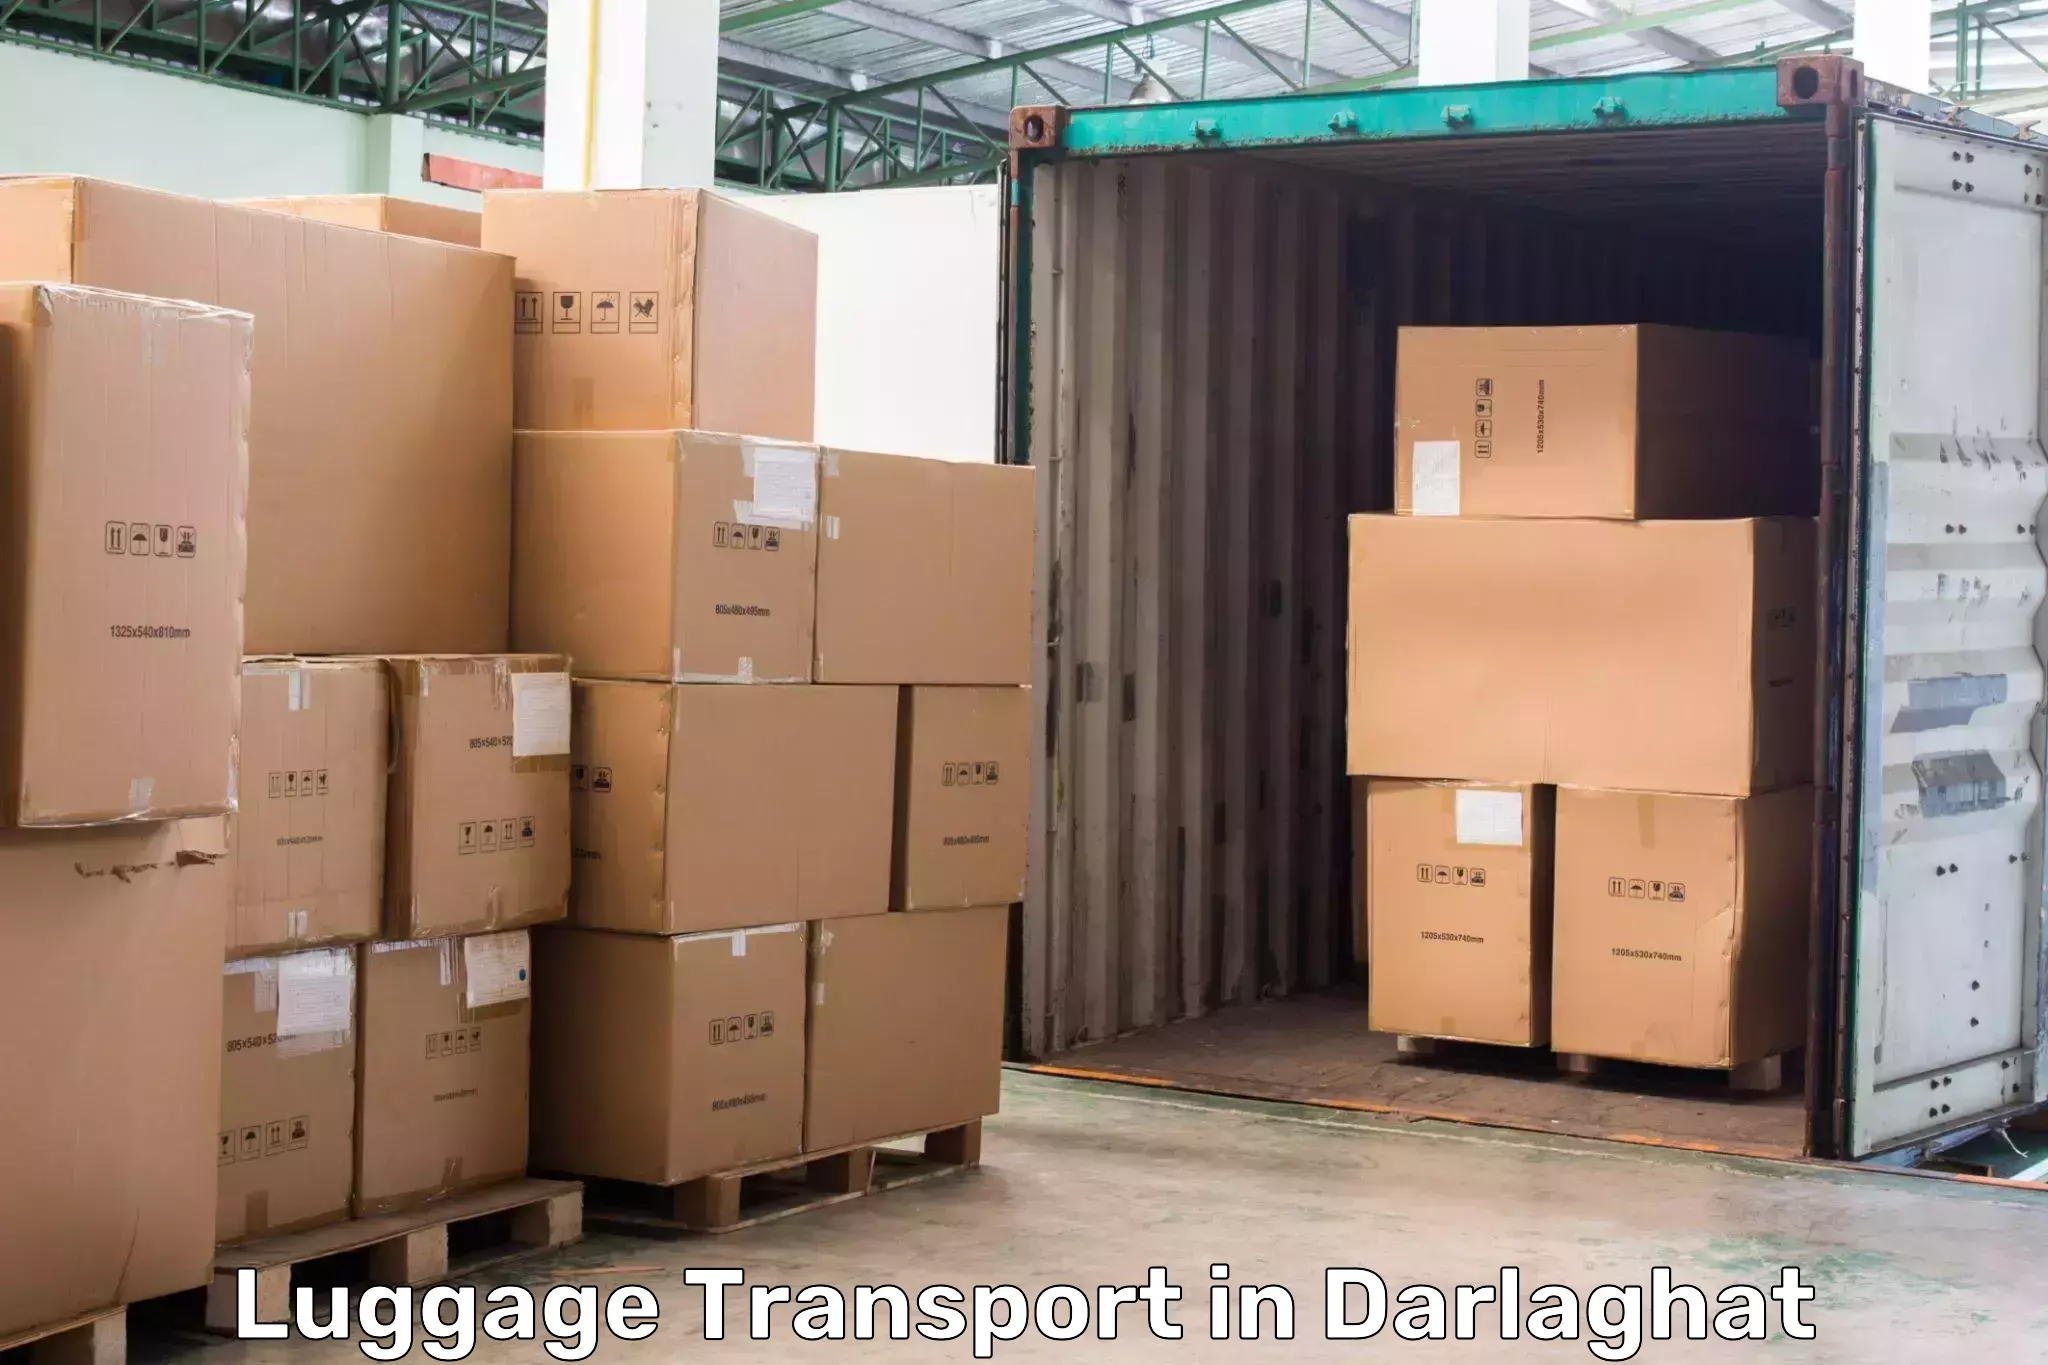 Multi-destination luggage transport in Darlaghat